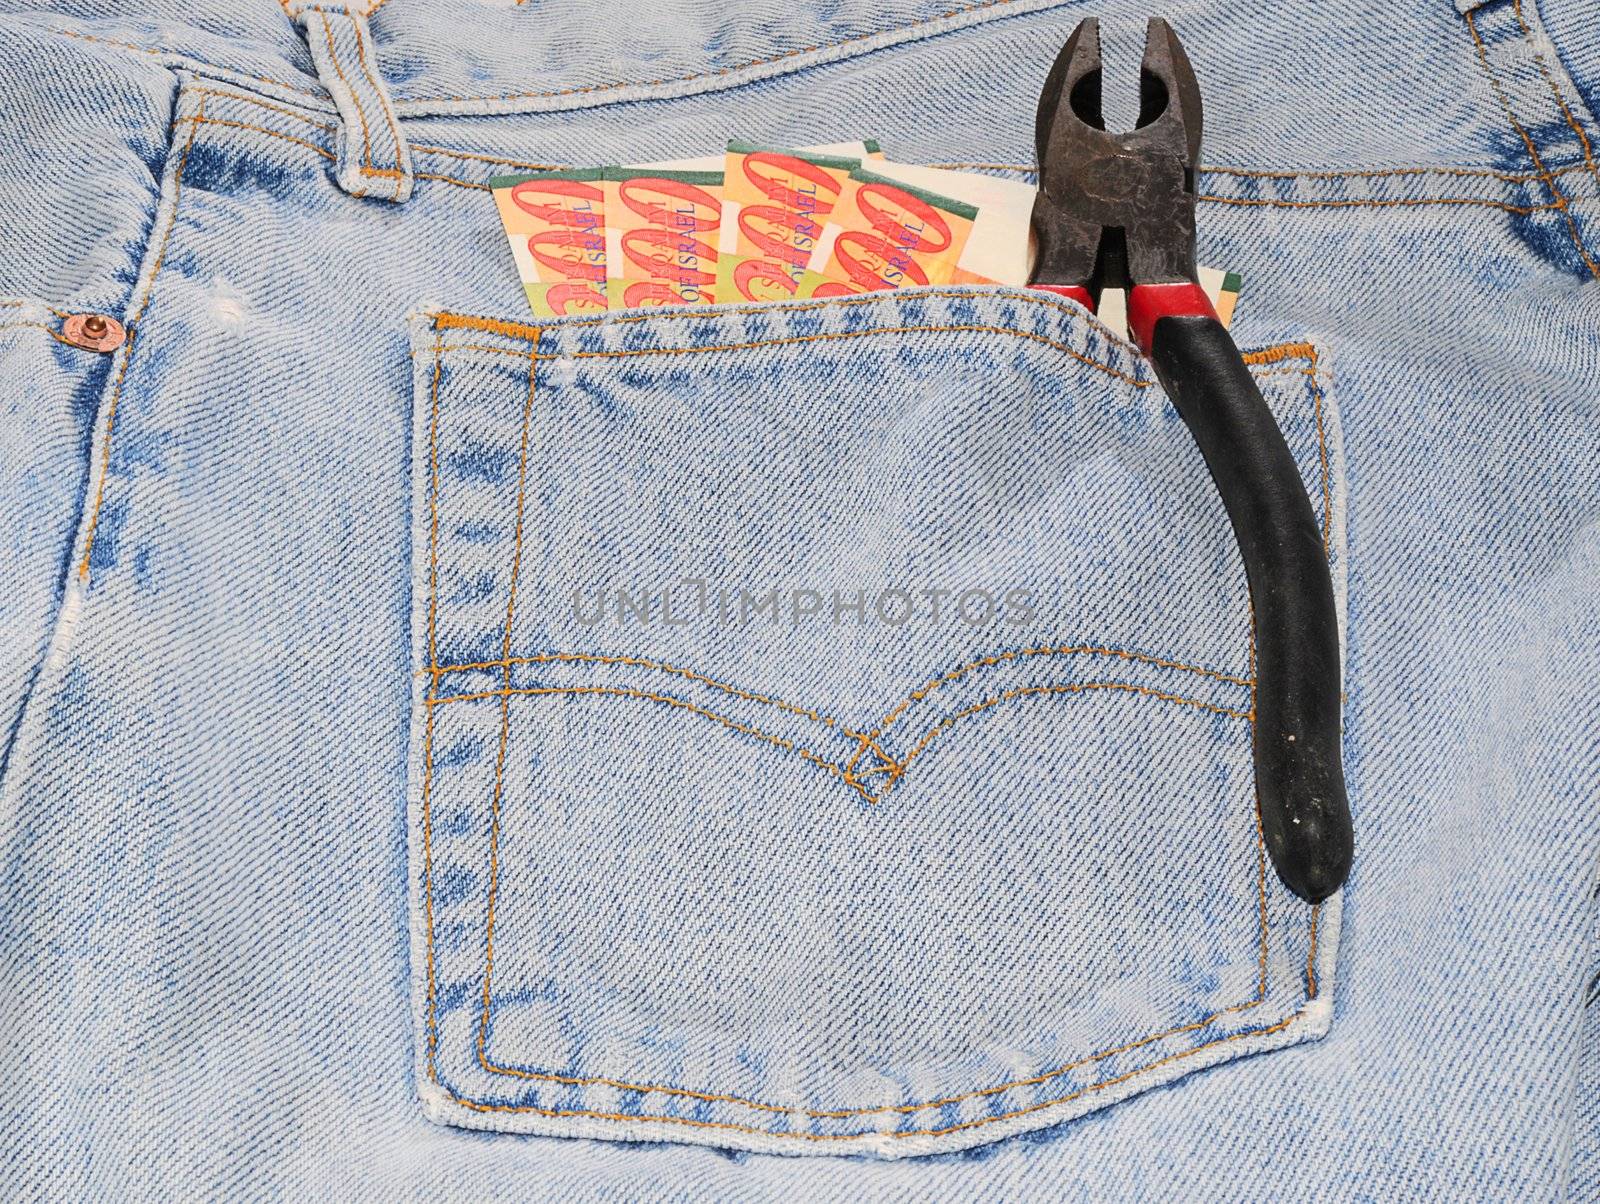 Israel Shekel Bills And Pliers In Hip Pocket Of Jeans.